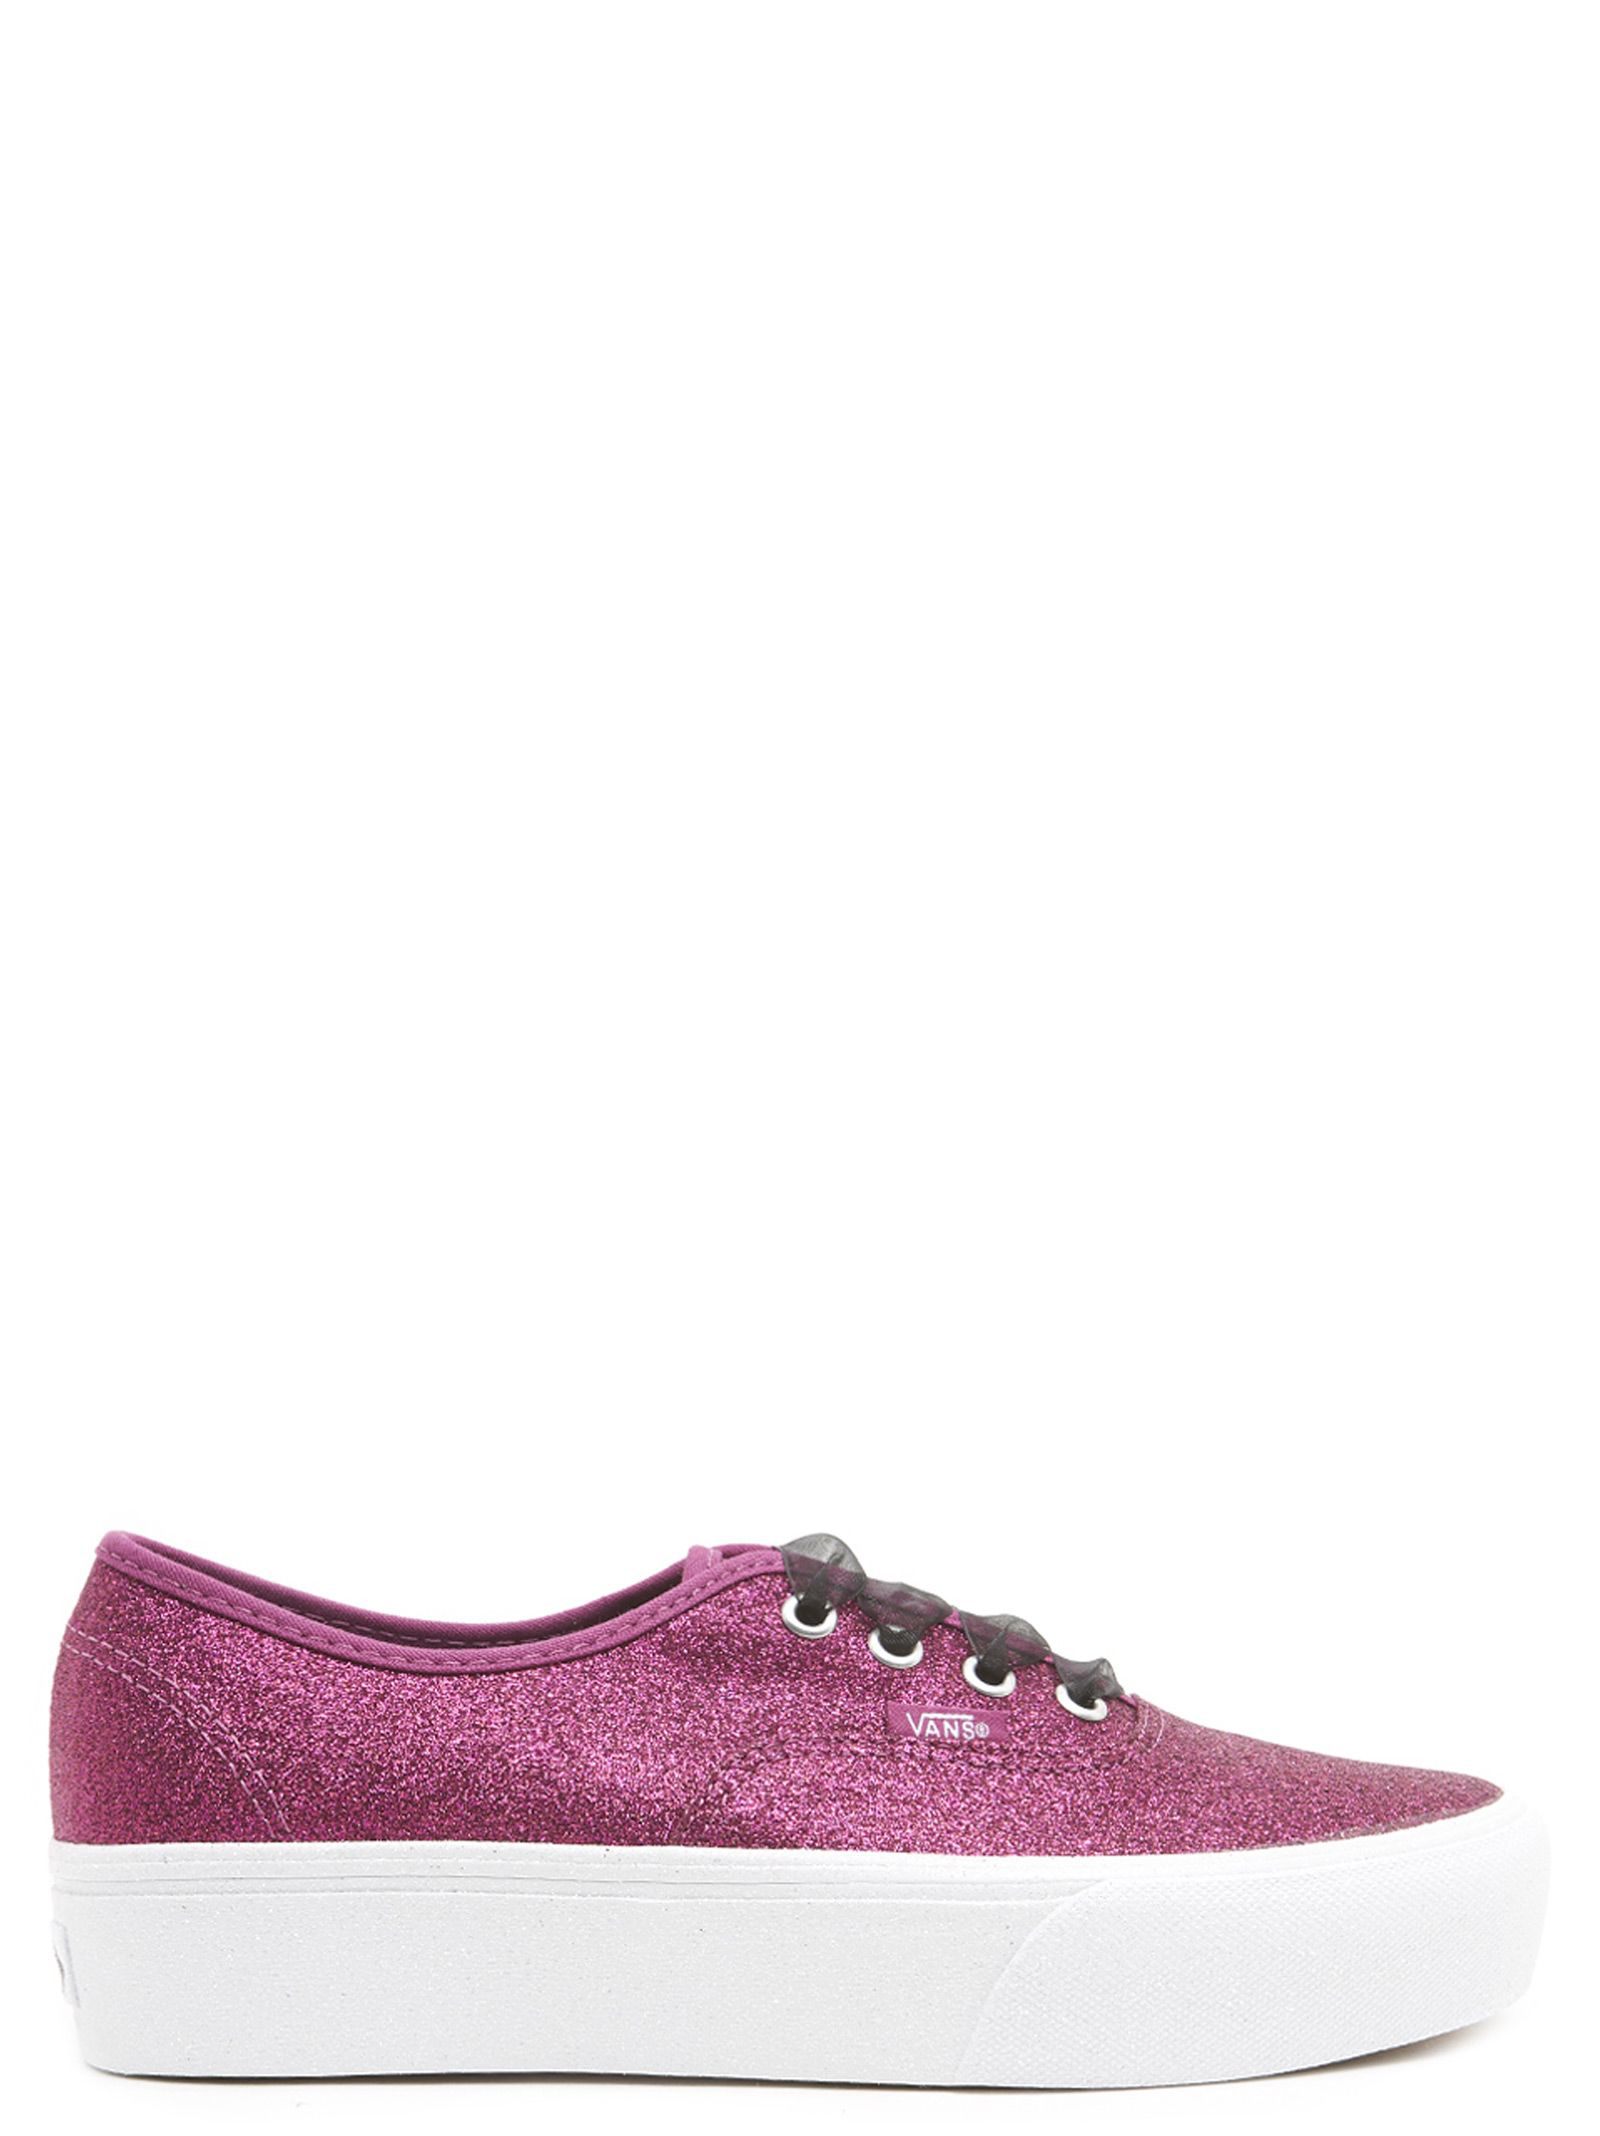 Vans Authentic Glitter Shoes In Fuchsia | ModeSens